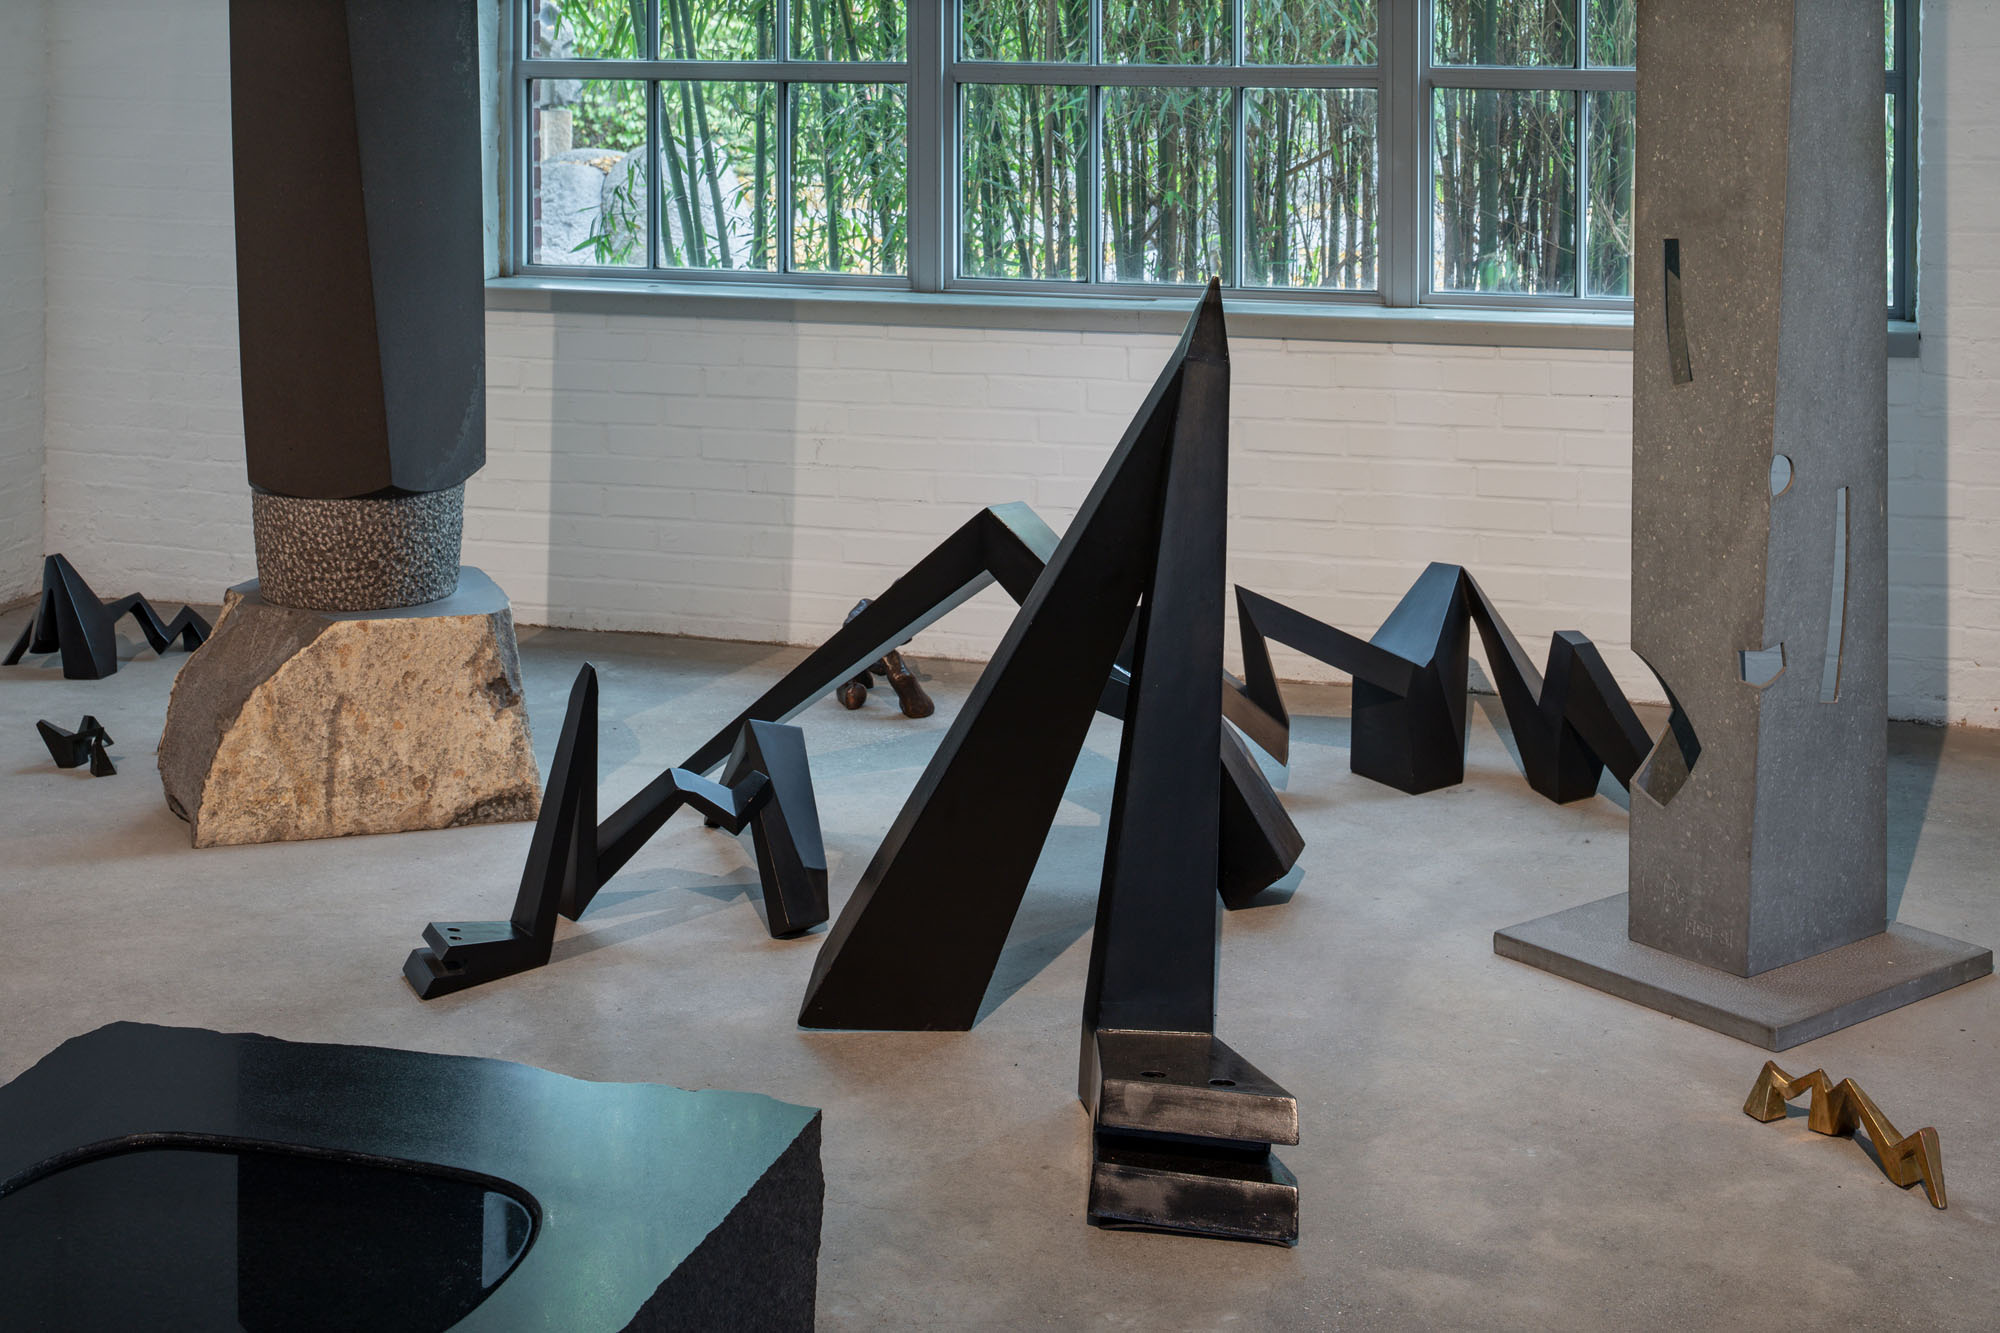 installation view of sculptures inside the noguchi museum